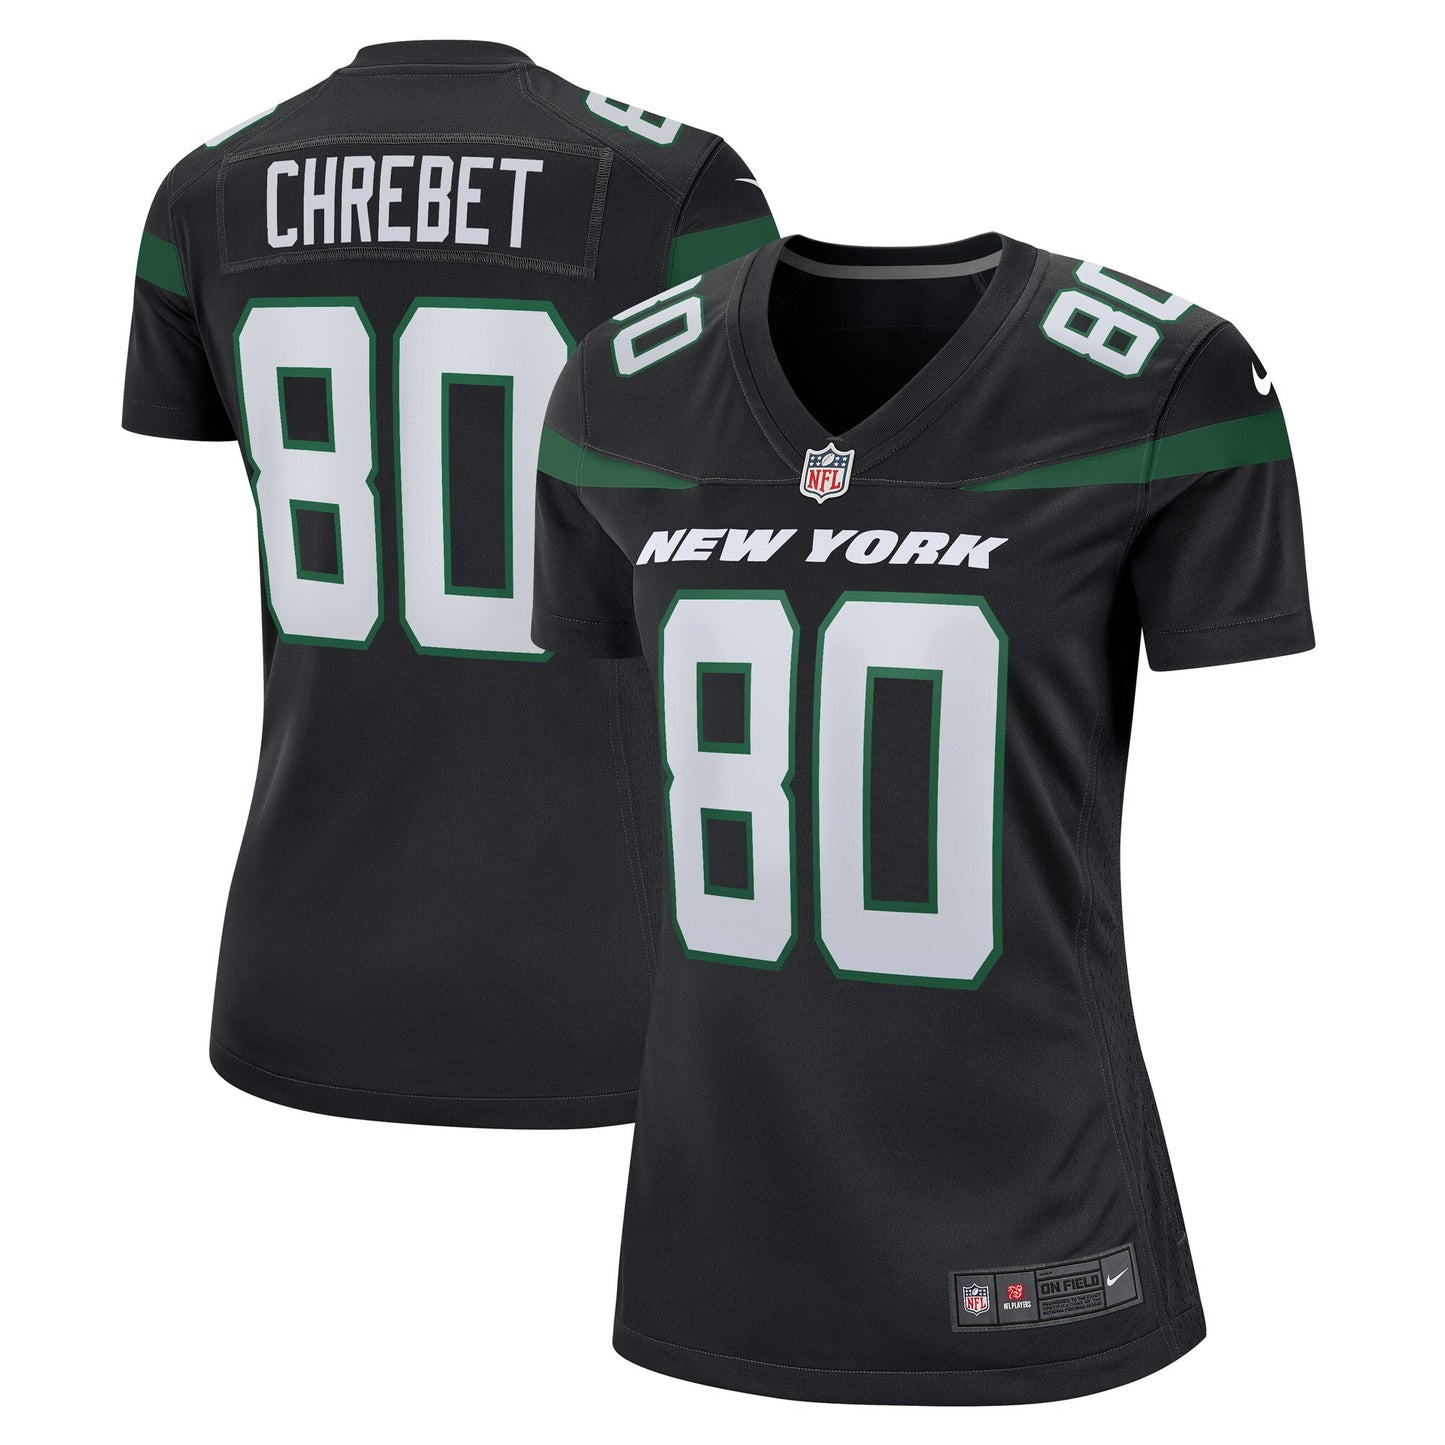 Wayne Chrebet New York Jets Nike Women's Retired Player Jersey - Black